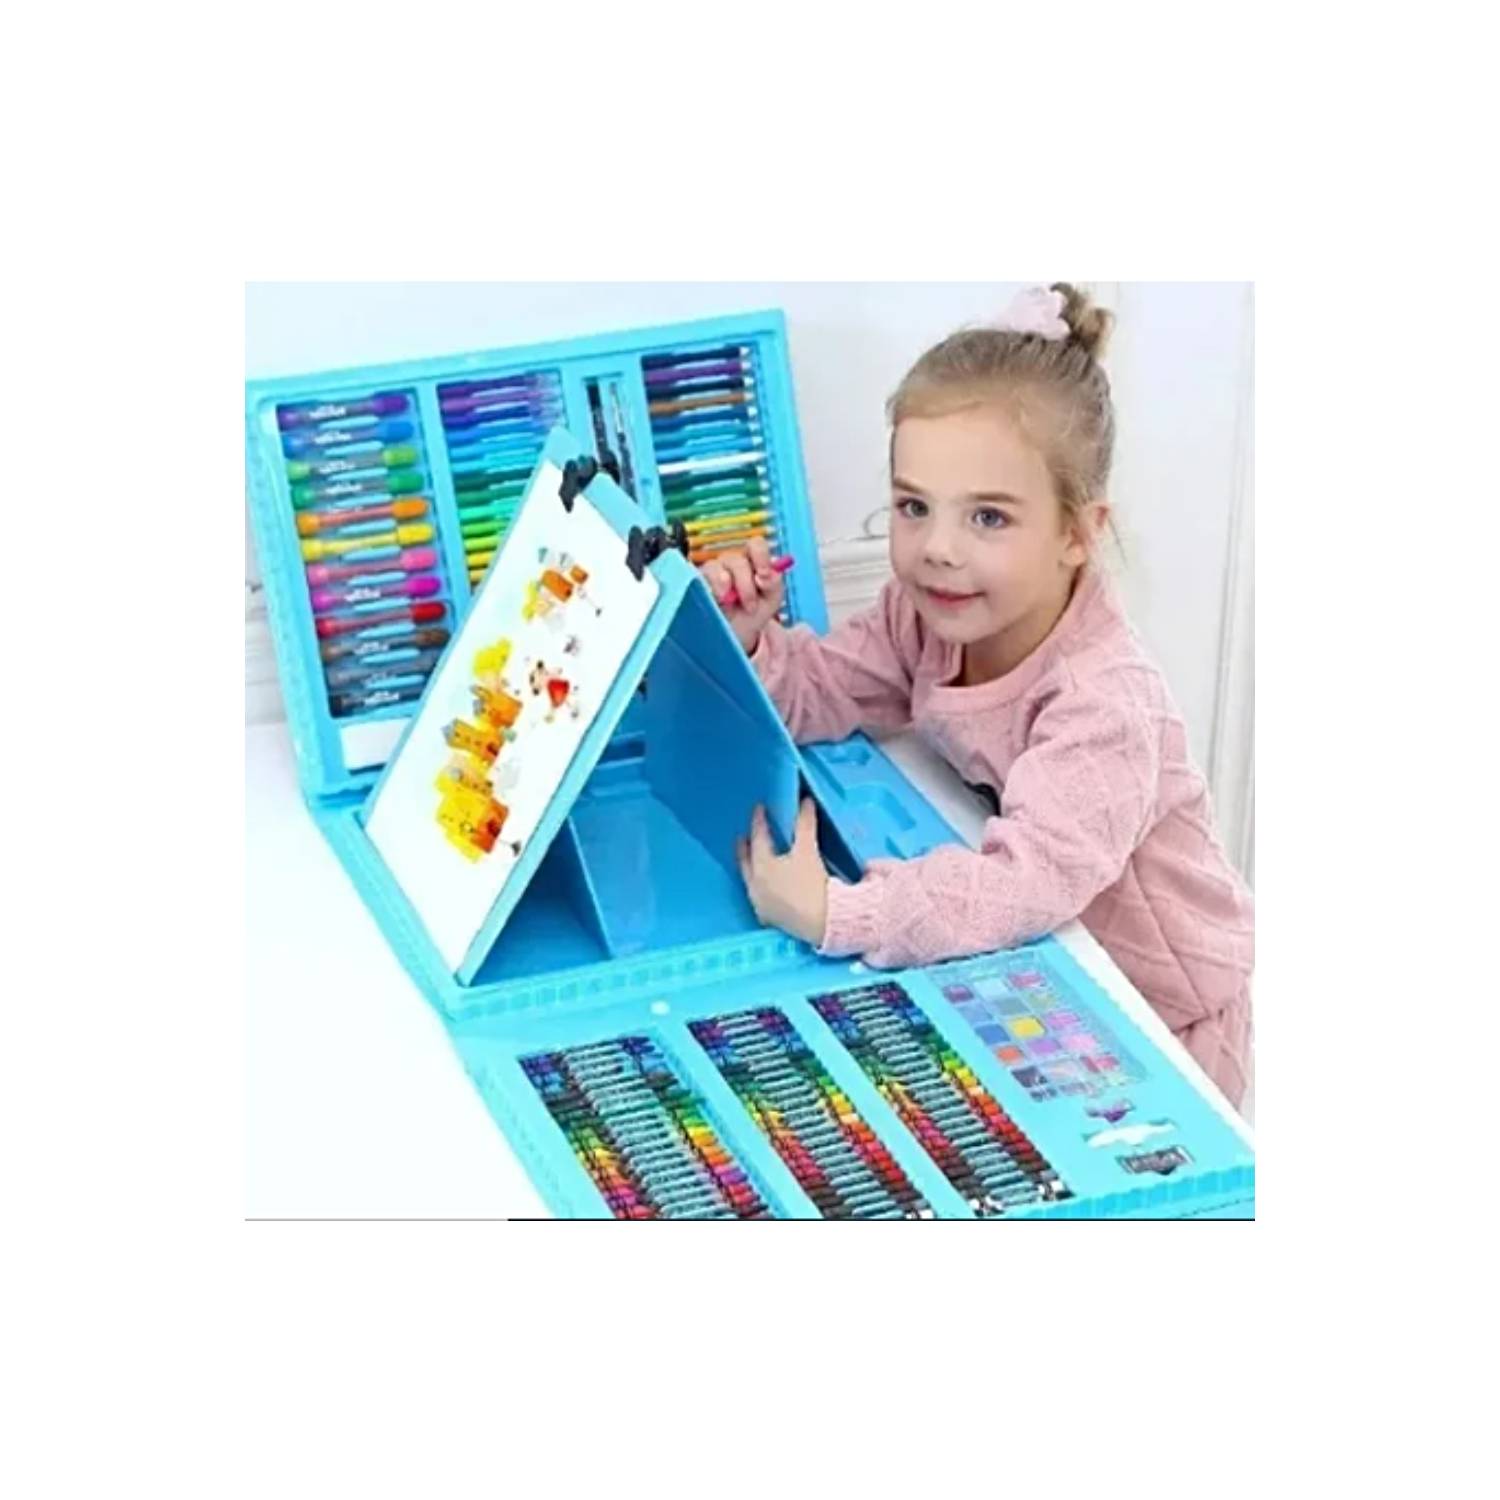 Kit De Pintura Para Niños De 208 Pcs Set De Arte